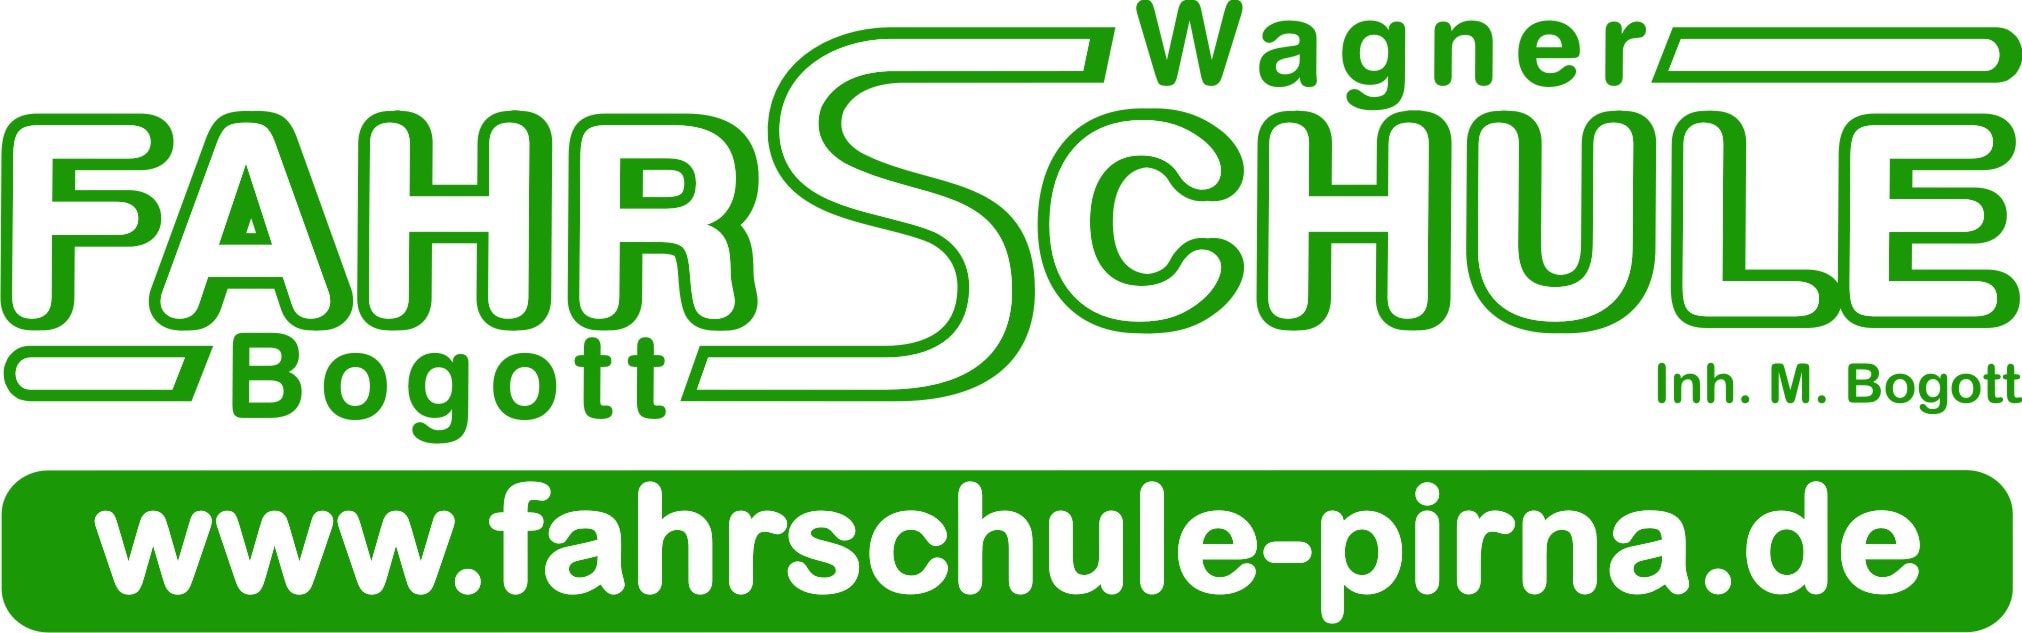 Logo Fahrschule Bogott & Wagner